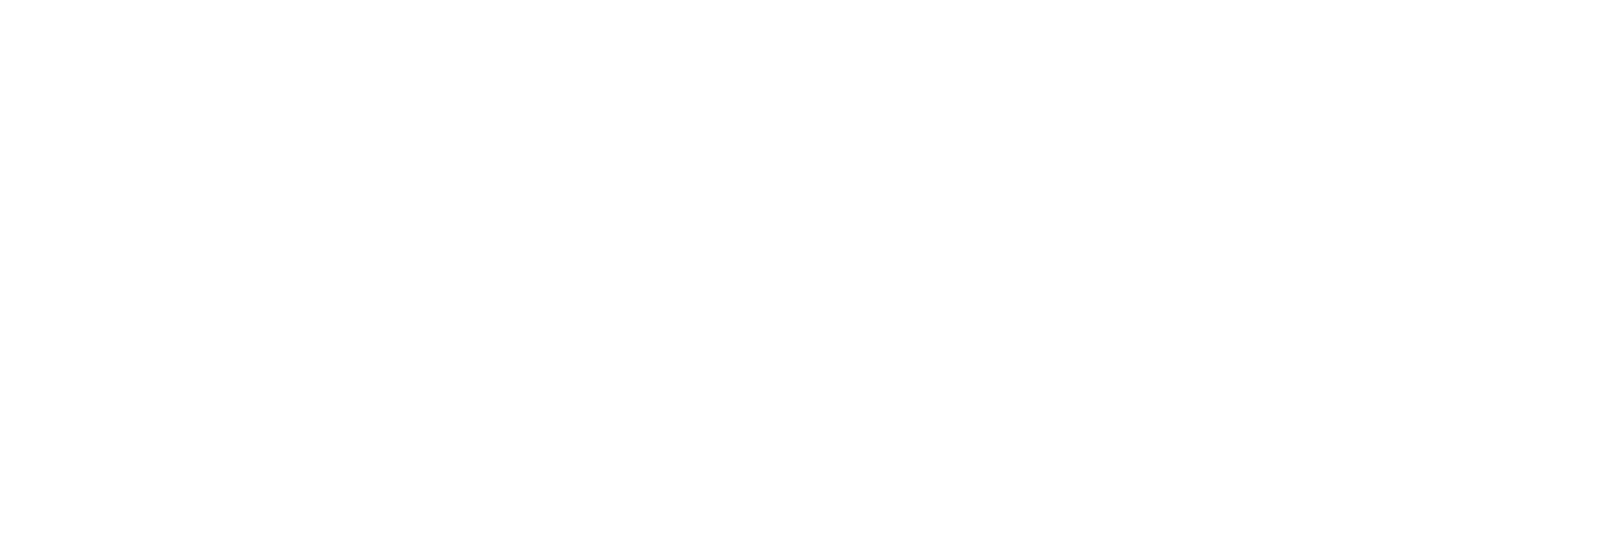 Illinois Tool Works  logo pour fonds sombres (PNG transparent)